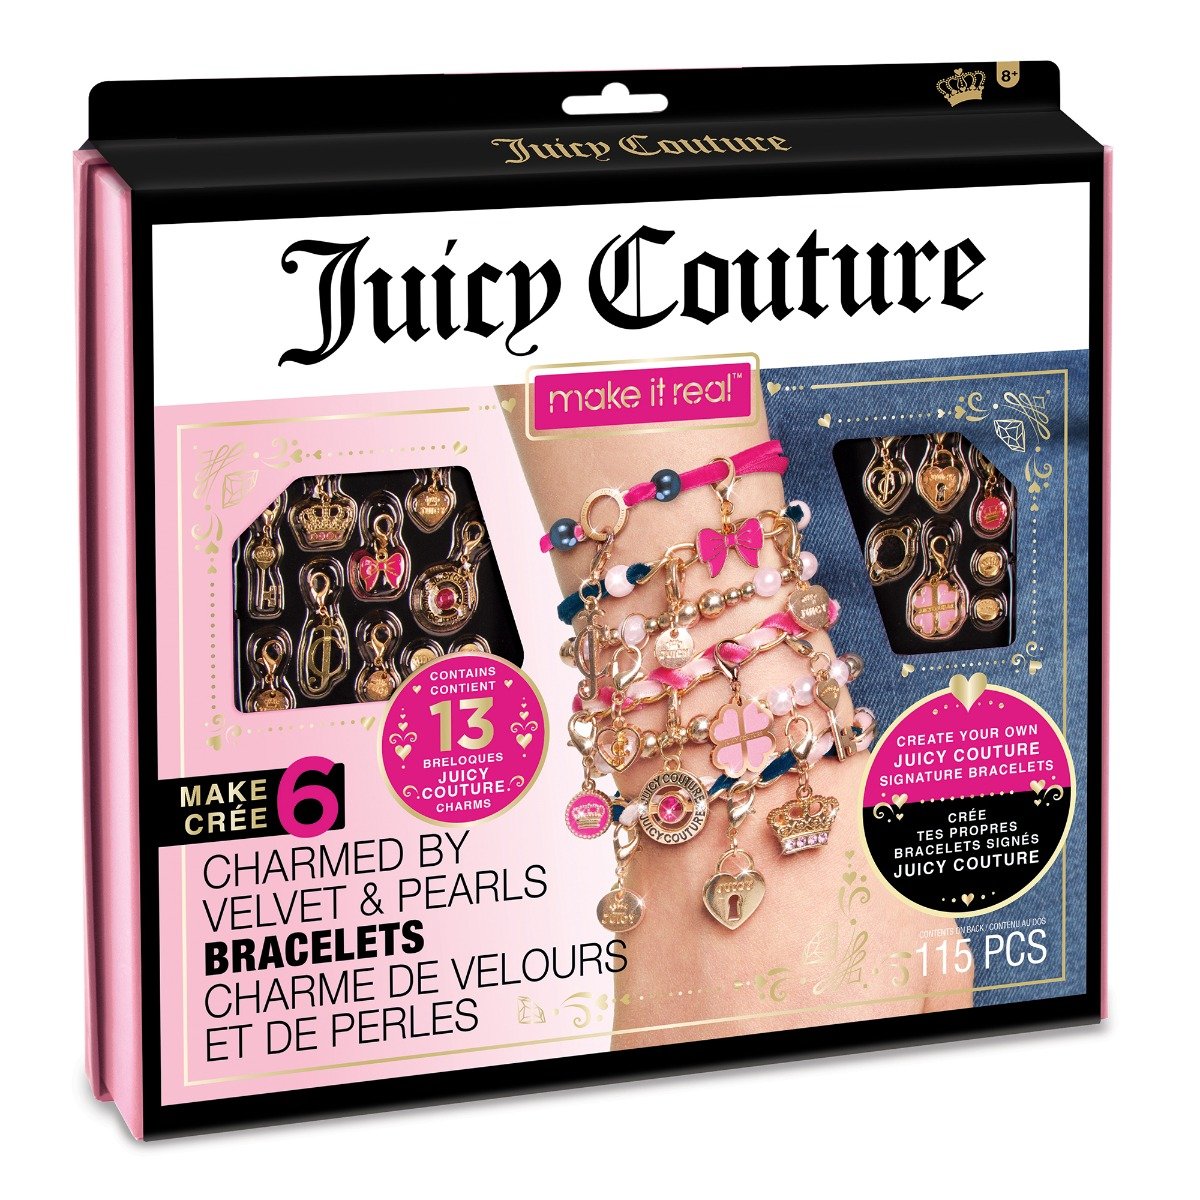 Set de bratari si bijuterii Juicy Couture Charmed By Velvet and Pearls, Make It Real Jocuri creative 2023-09-26